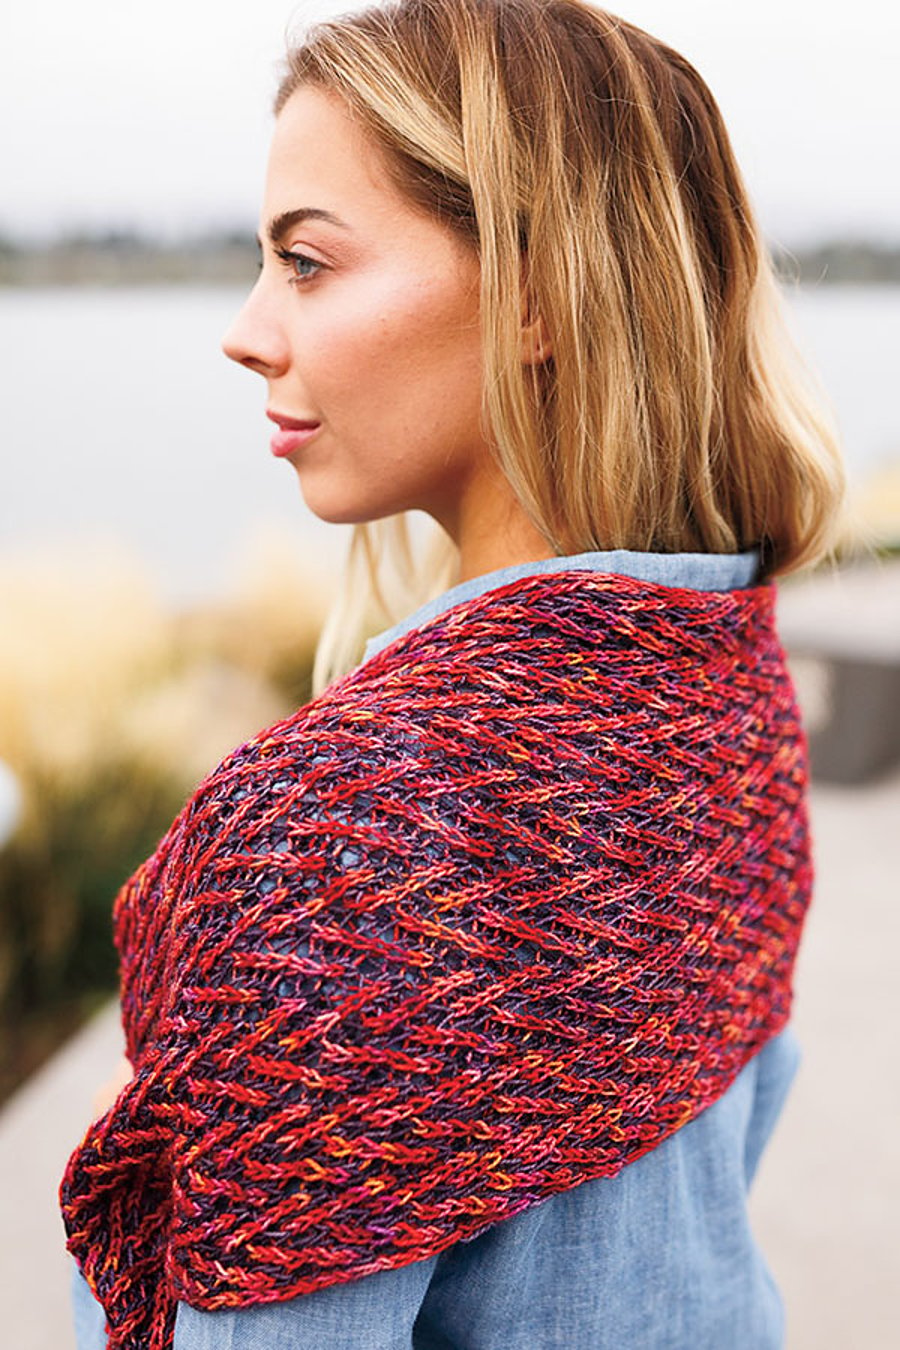 Brioche 2 coloured scarf knitting pattern